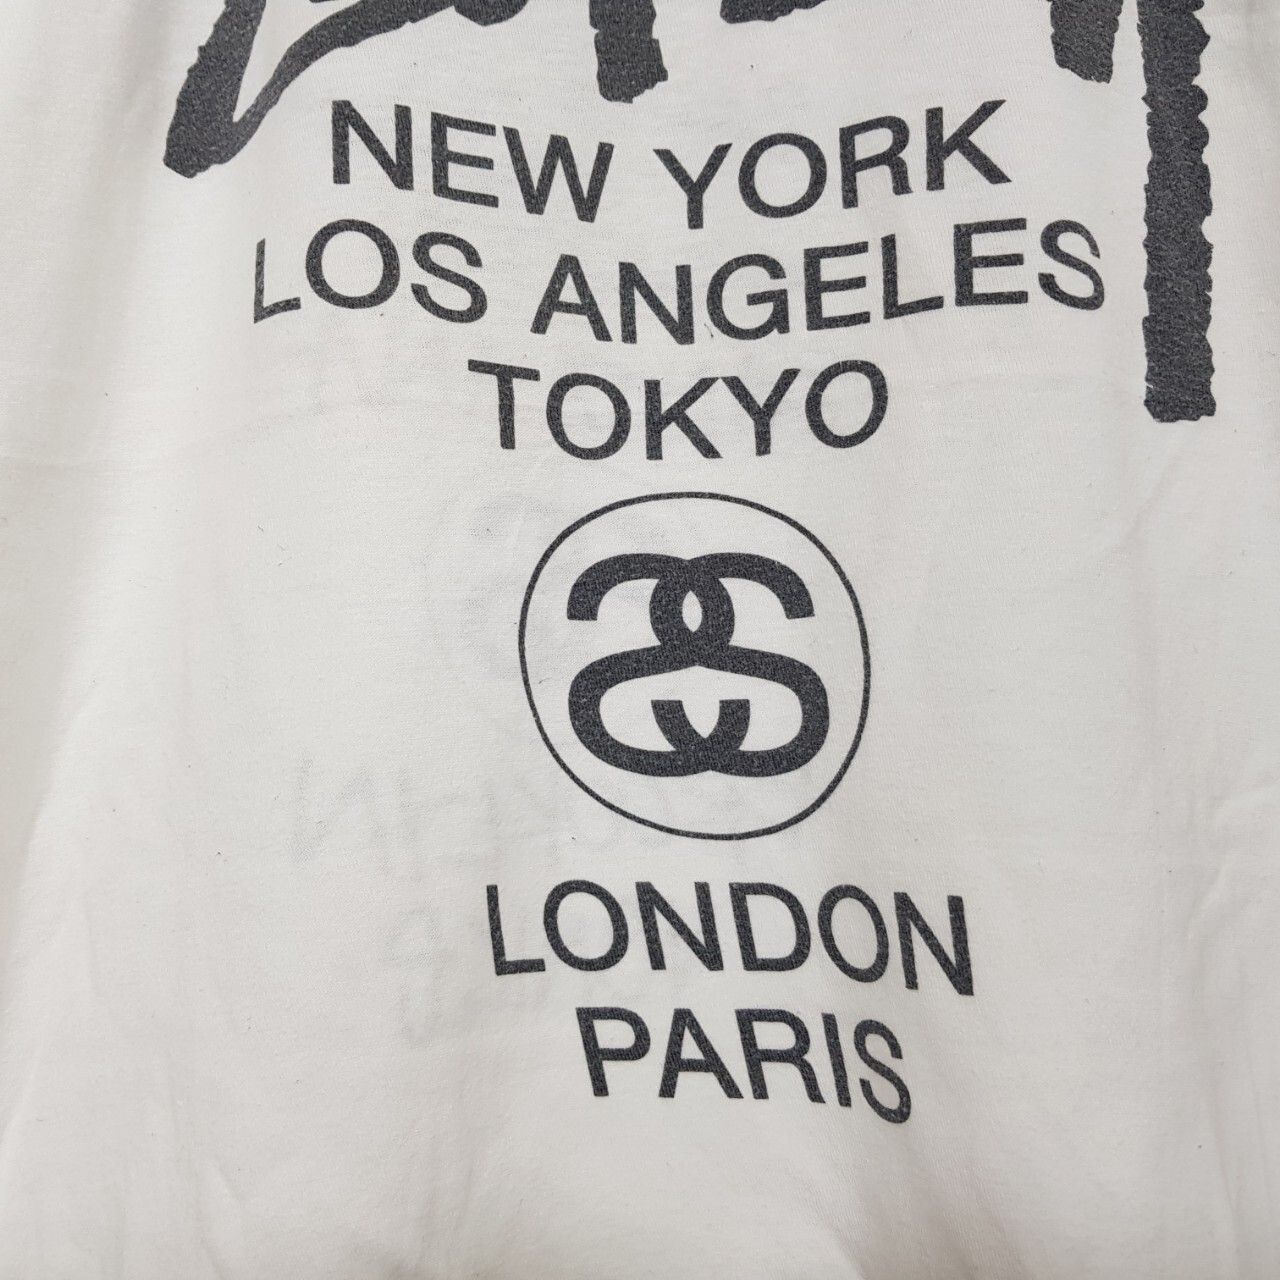 Stussy STUSSY Shirt New York Los Angeles Tokyo London Paris Size US S / EU 44-46 / 1 - 6 Thumbnail